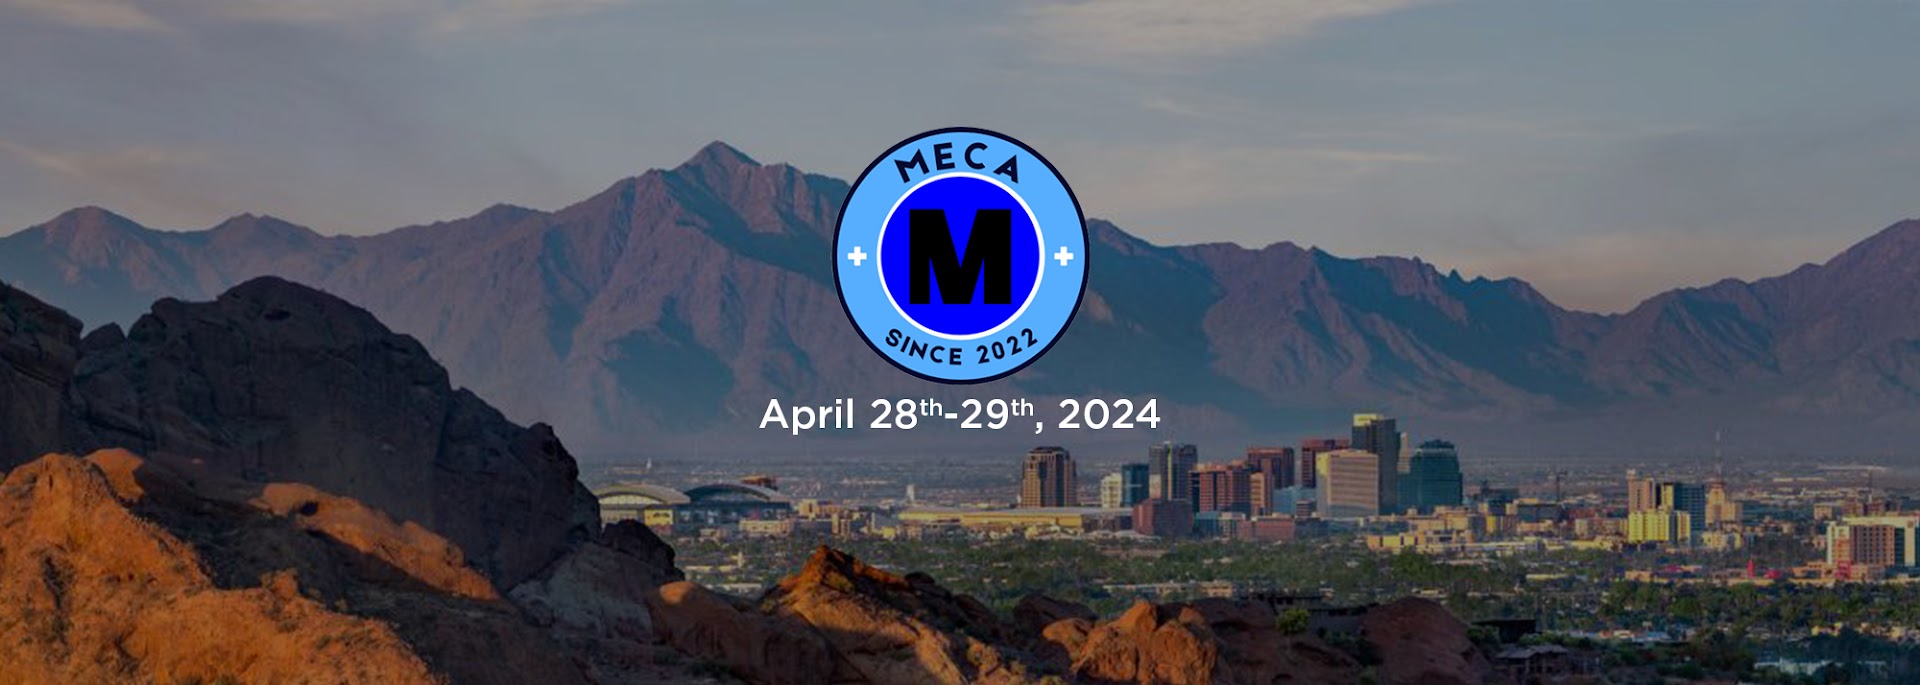 NeoGenesis Announces Participation at MECA 2024